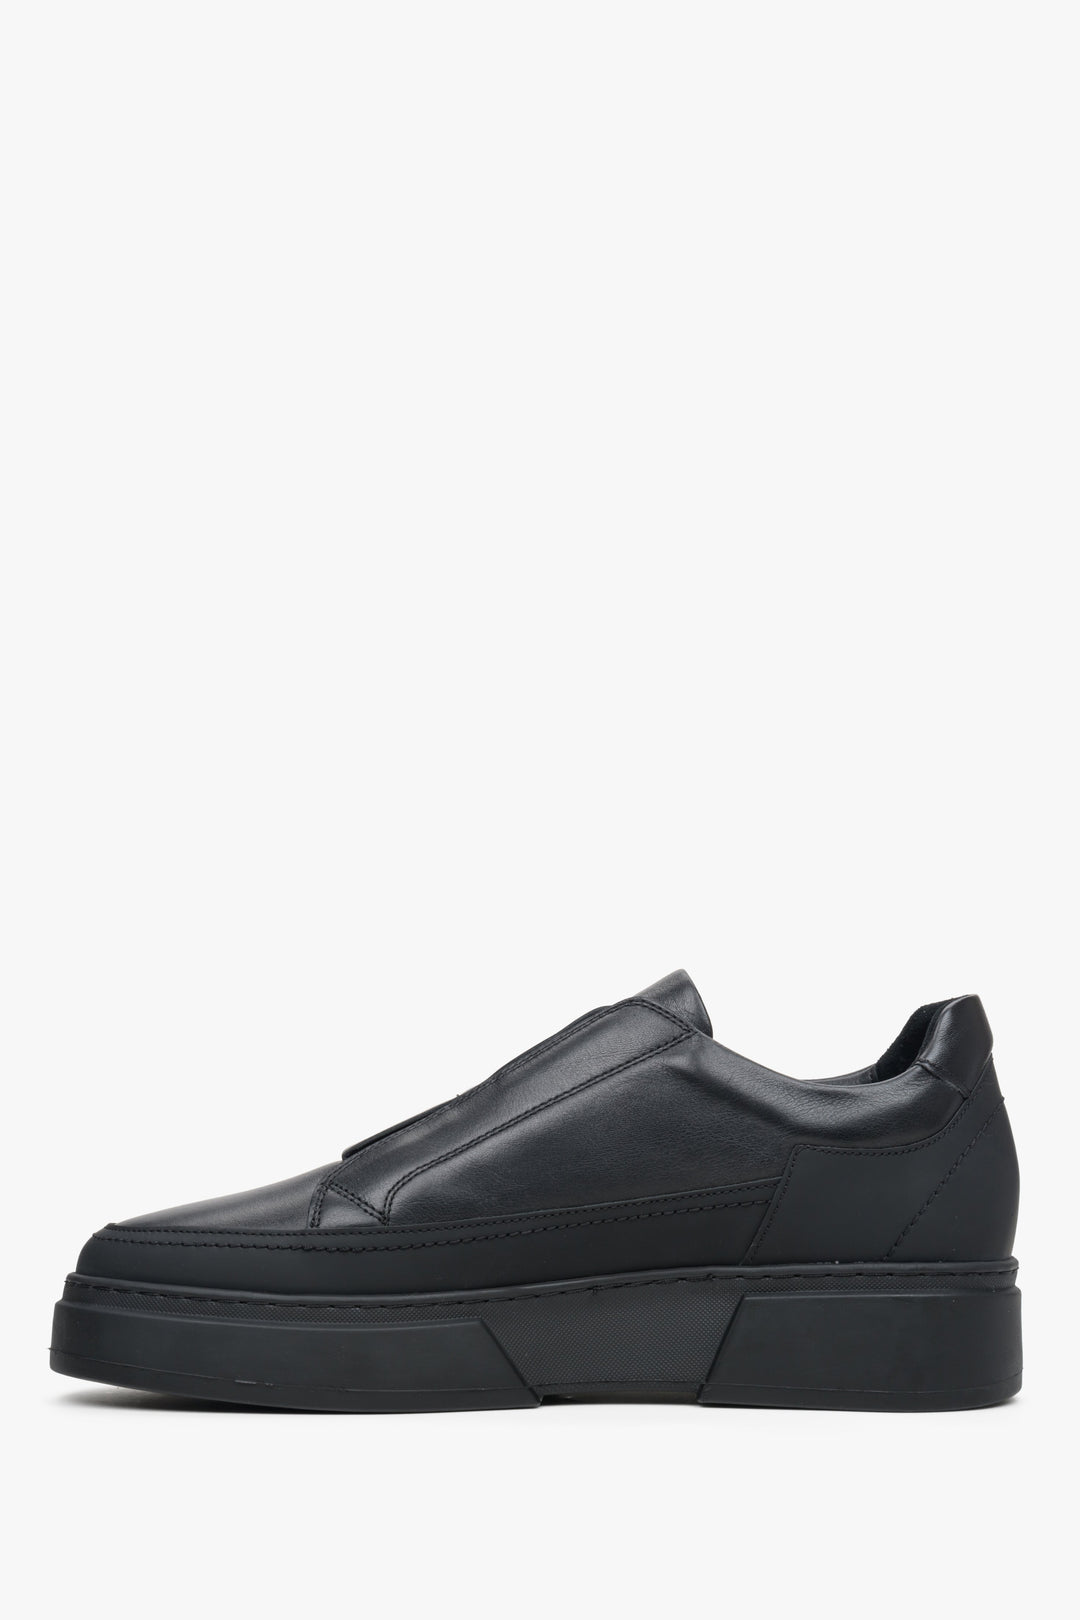 Men's black leather sneakers by Estro - shoe profile.